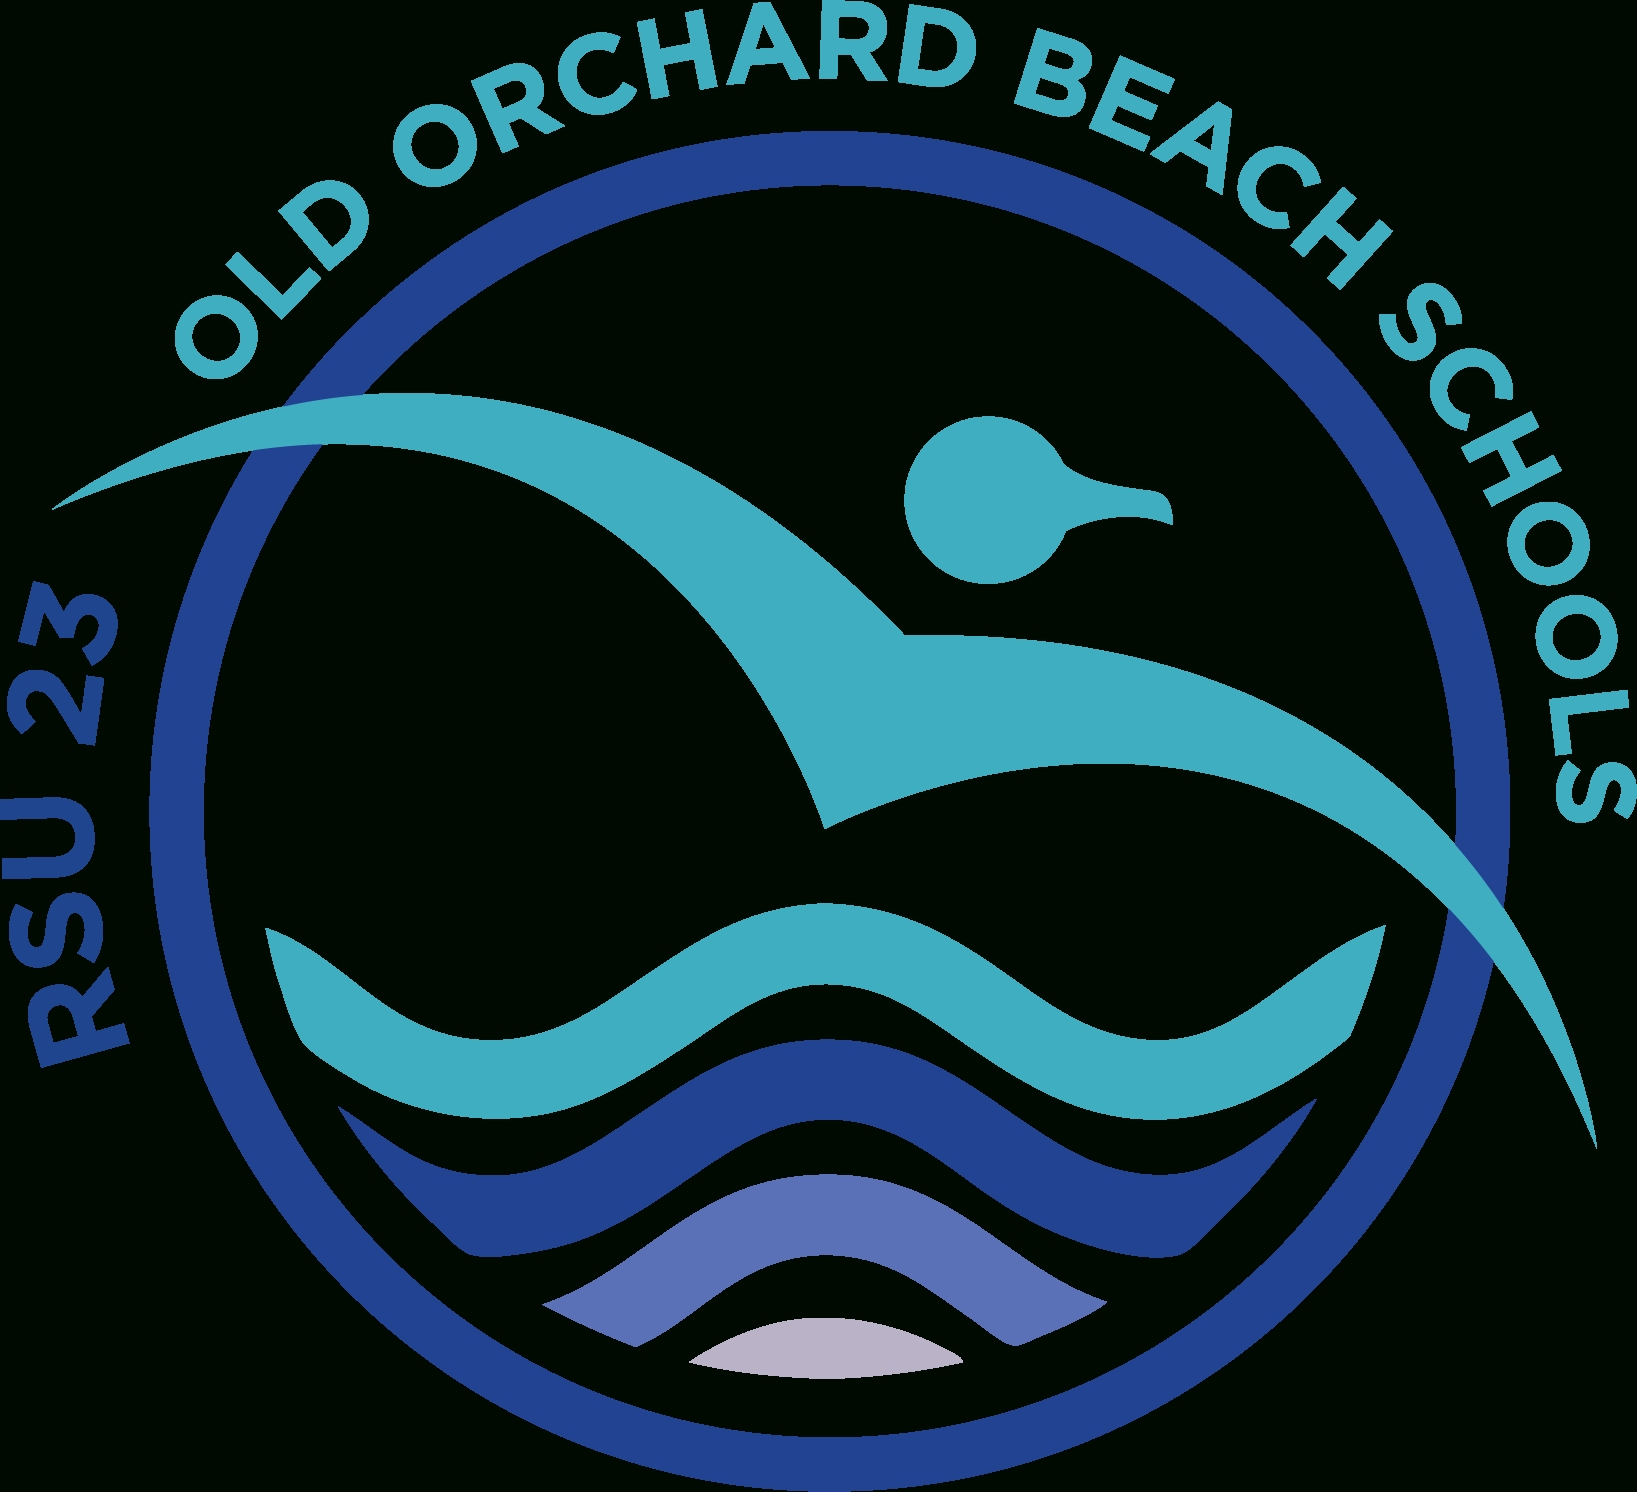 Rsu 23 Old Orchard Beach Schoolshome - Rsu 23 Old Orchard Beach Schools Rsu 6 School Calendar